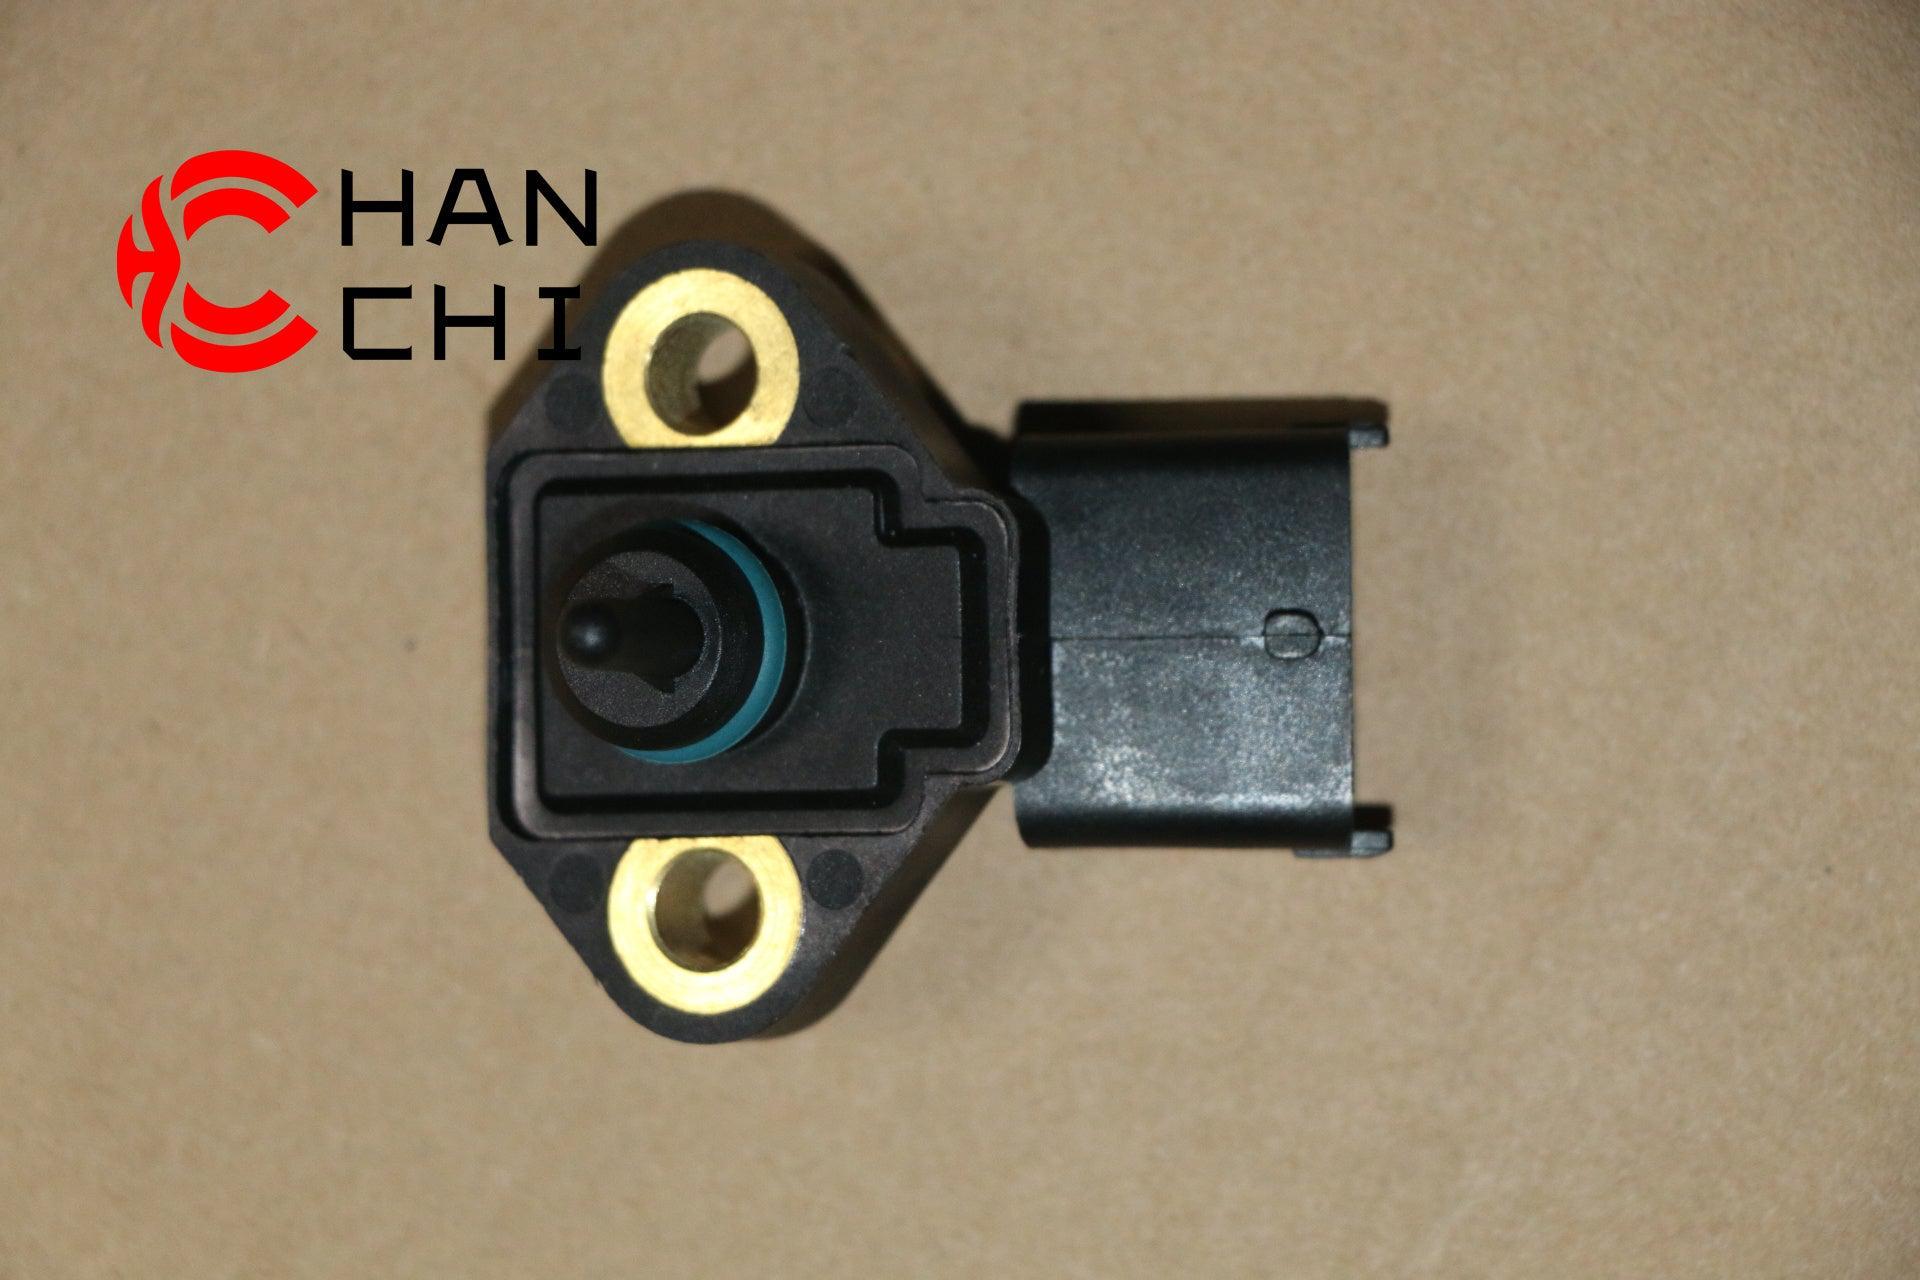 1pcs Intake Air pressure sensor For Weichai Deutz Bosch 0281002437 -  AliExpress